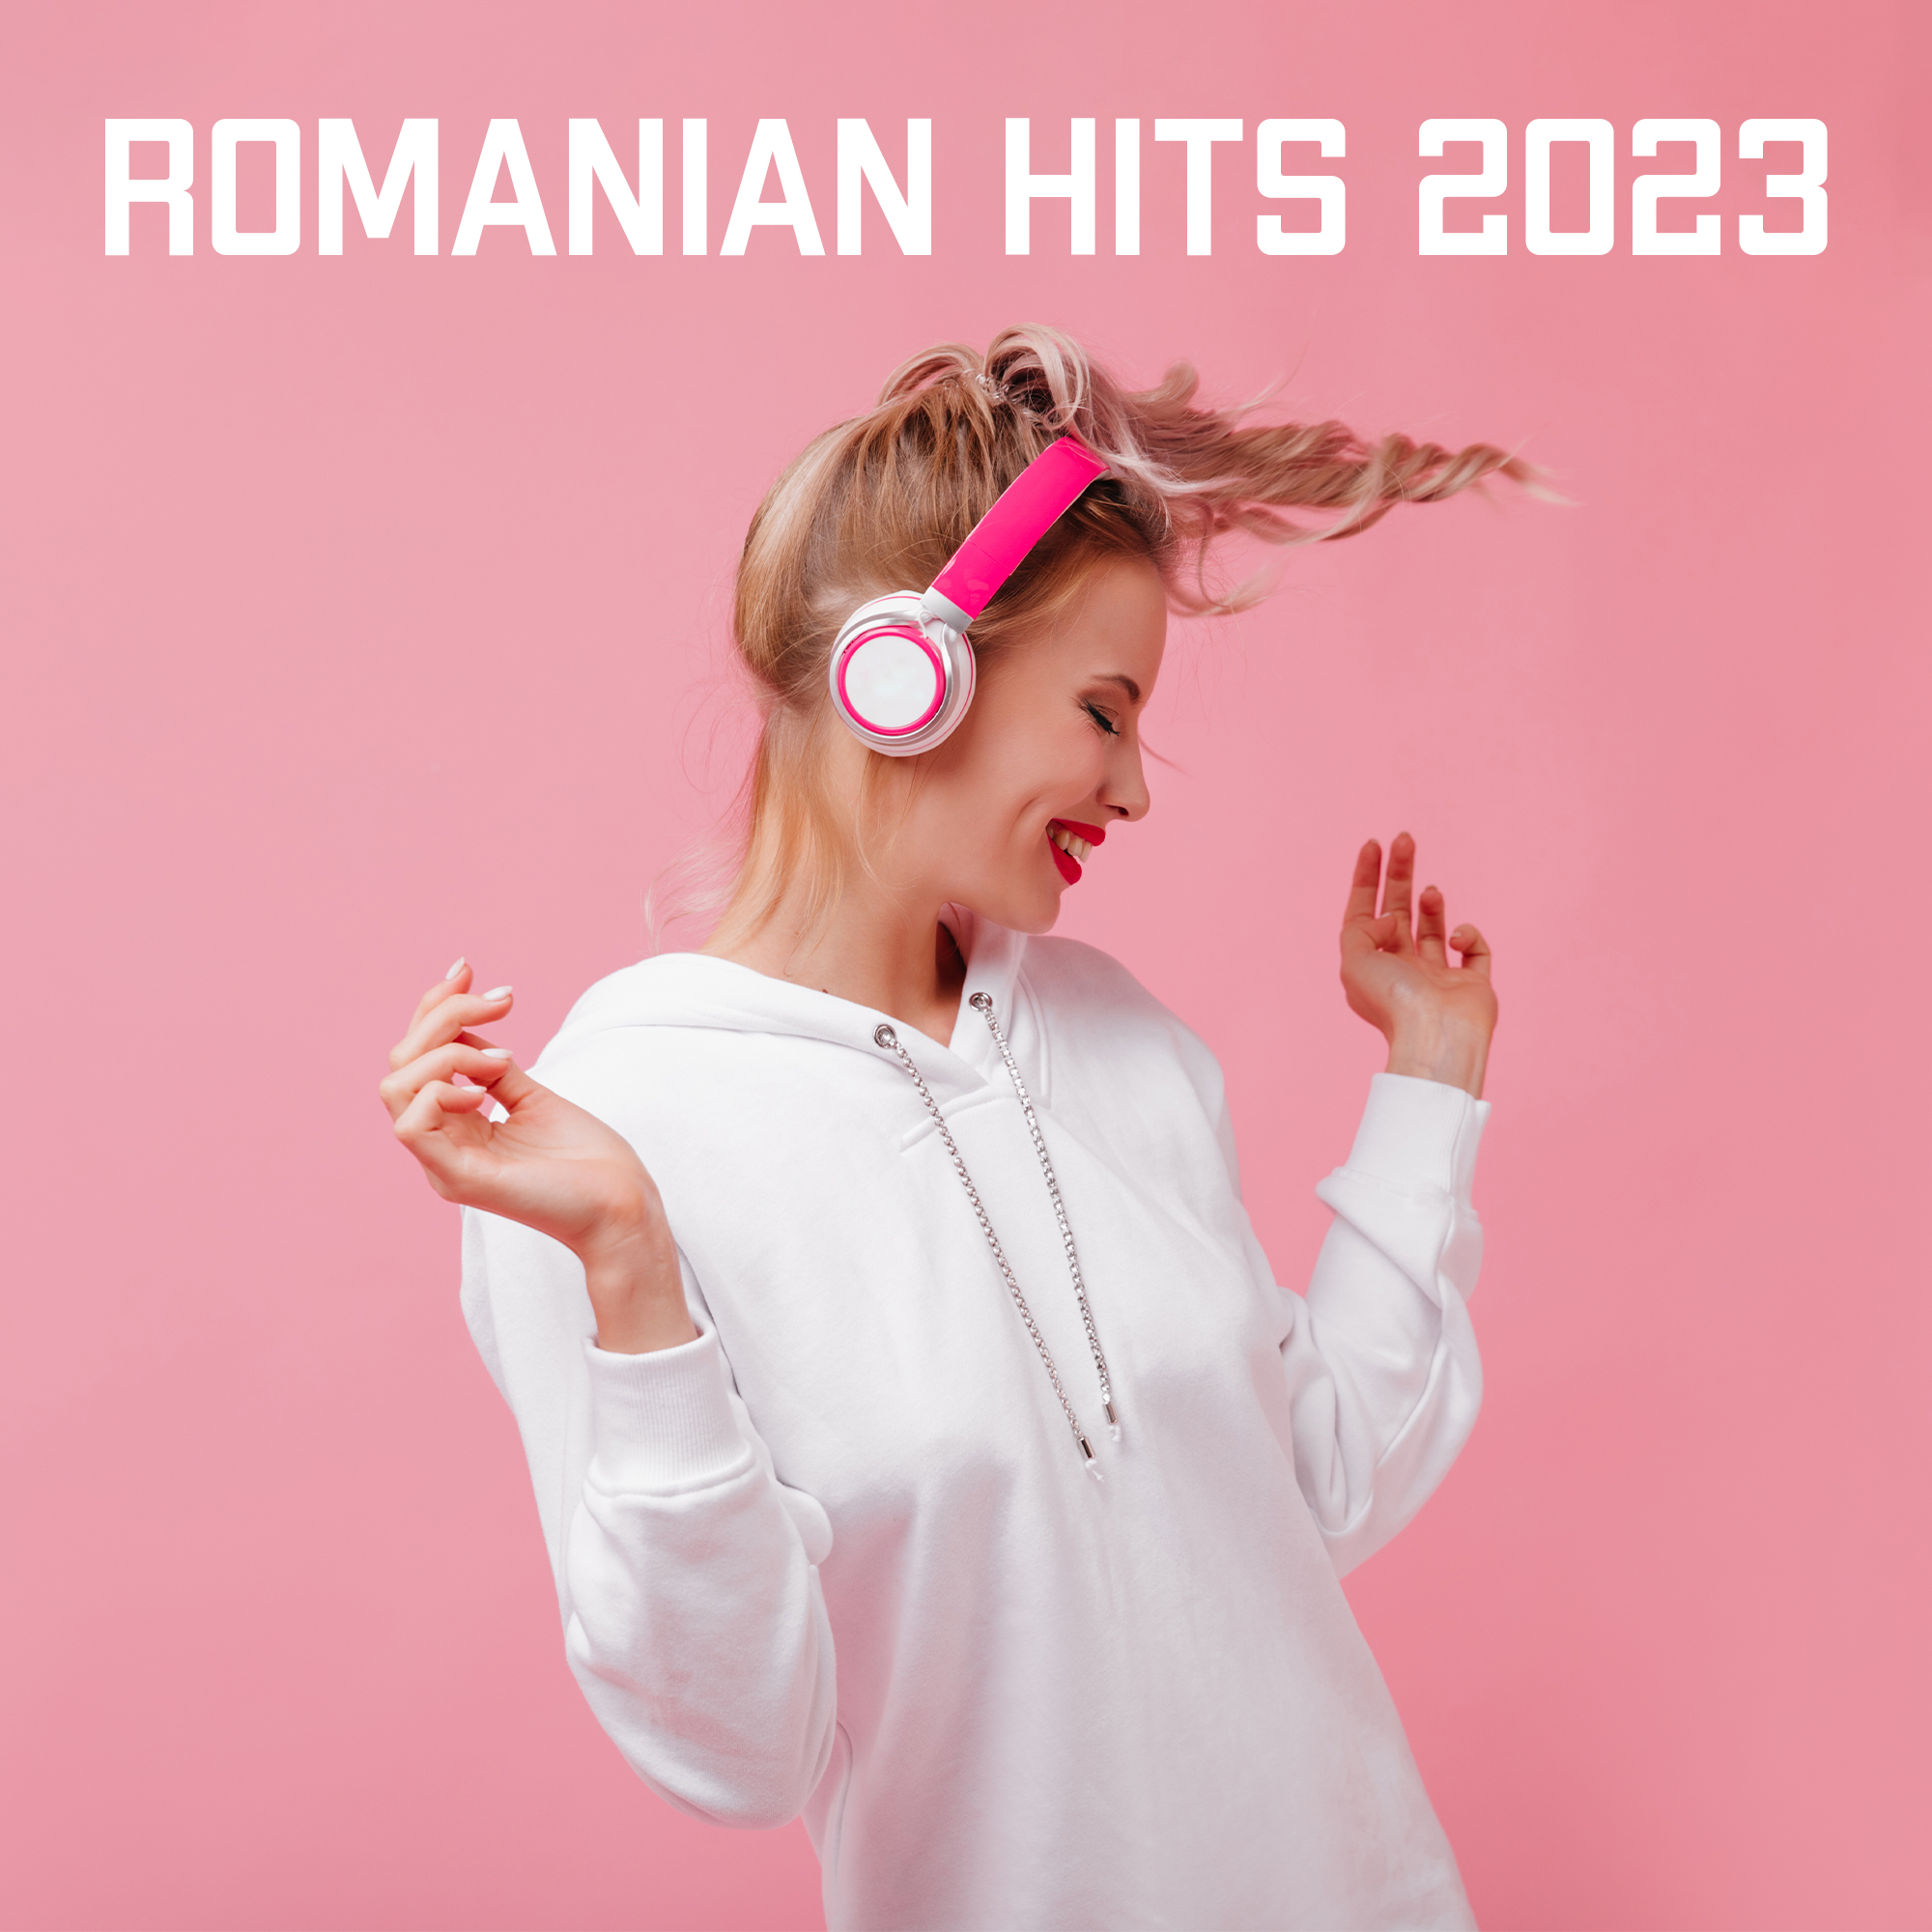 ROMANIAN HITS 2023